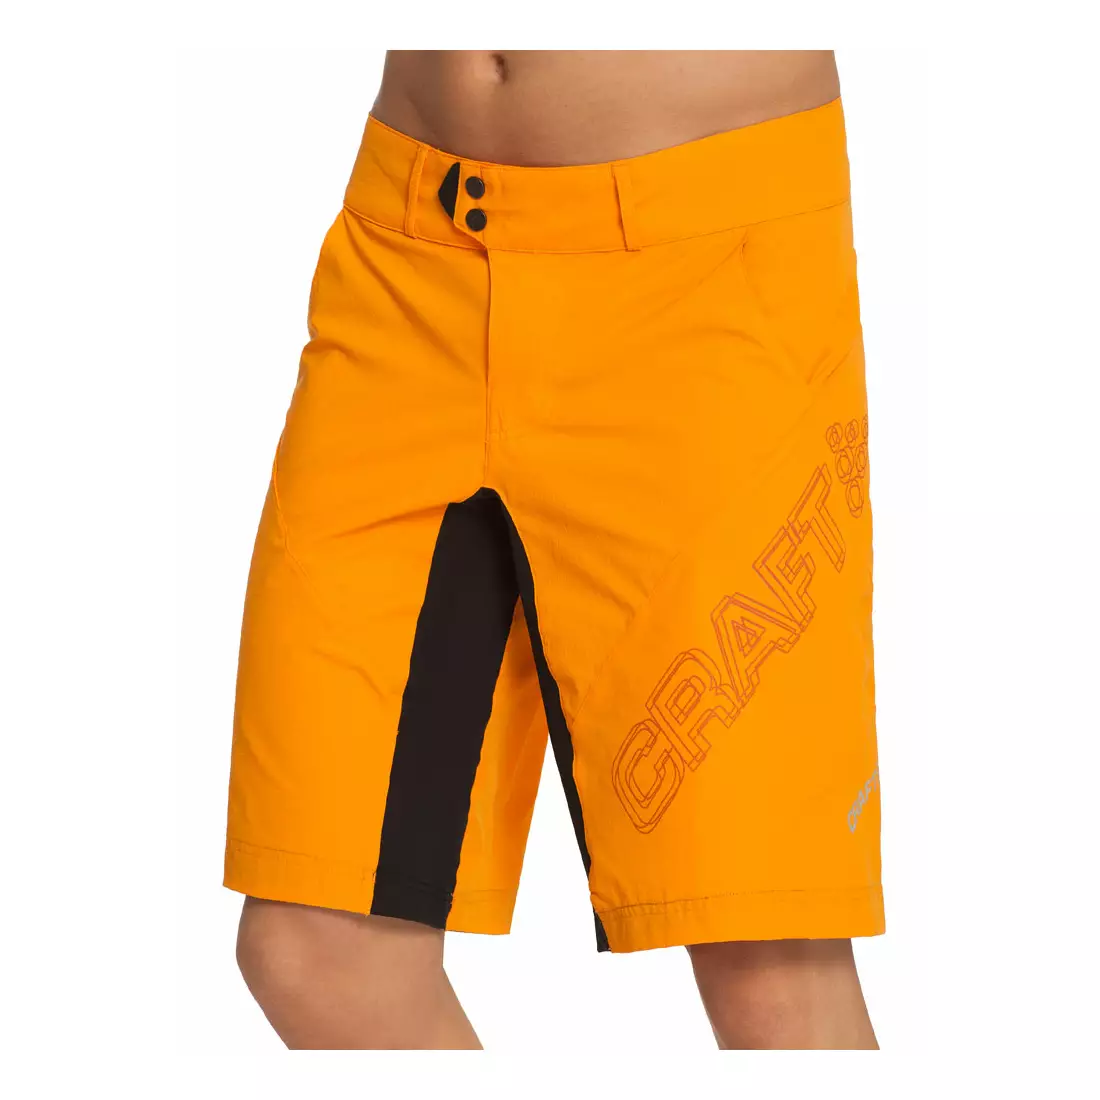 CRAFT ACTIVE BIKE - men's cycling shorts 1900700-2560, color: orange